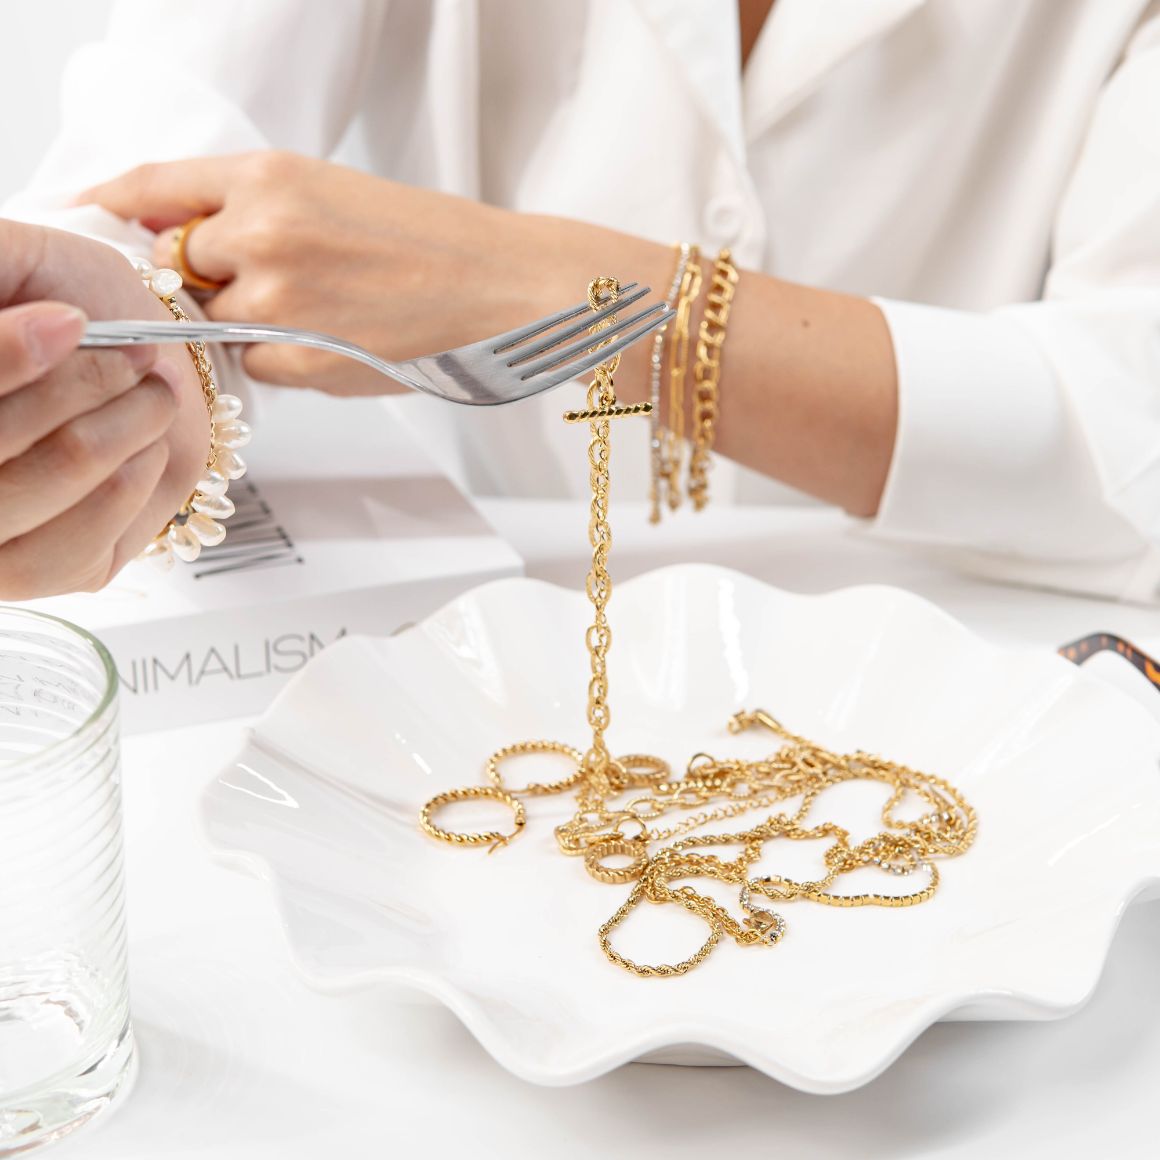 https://m.clubbella.co/product/kai-gold-bracelet/ Kai Bracelet gold 18